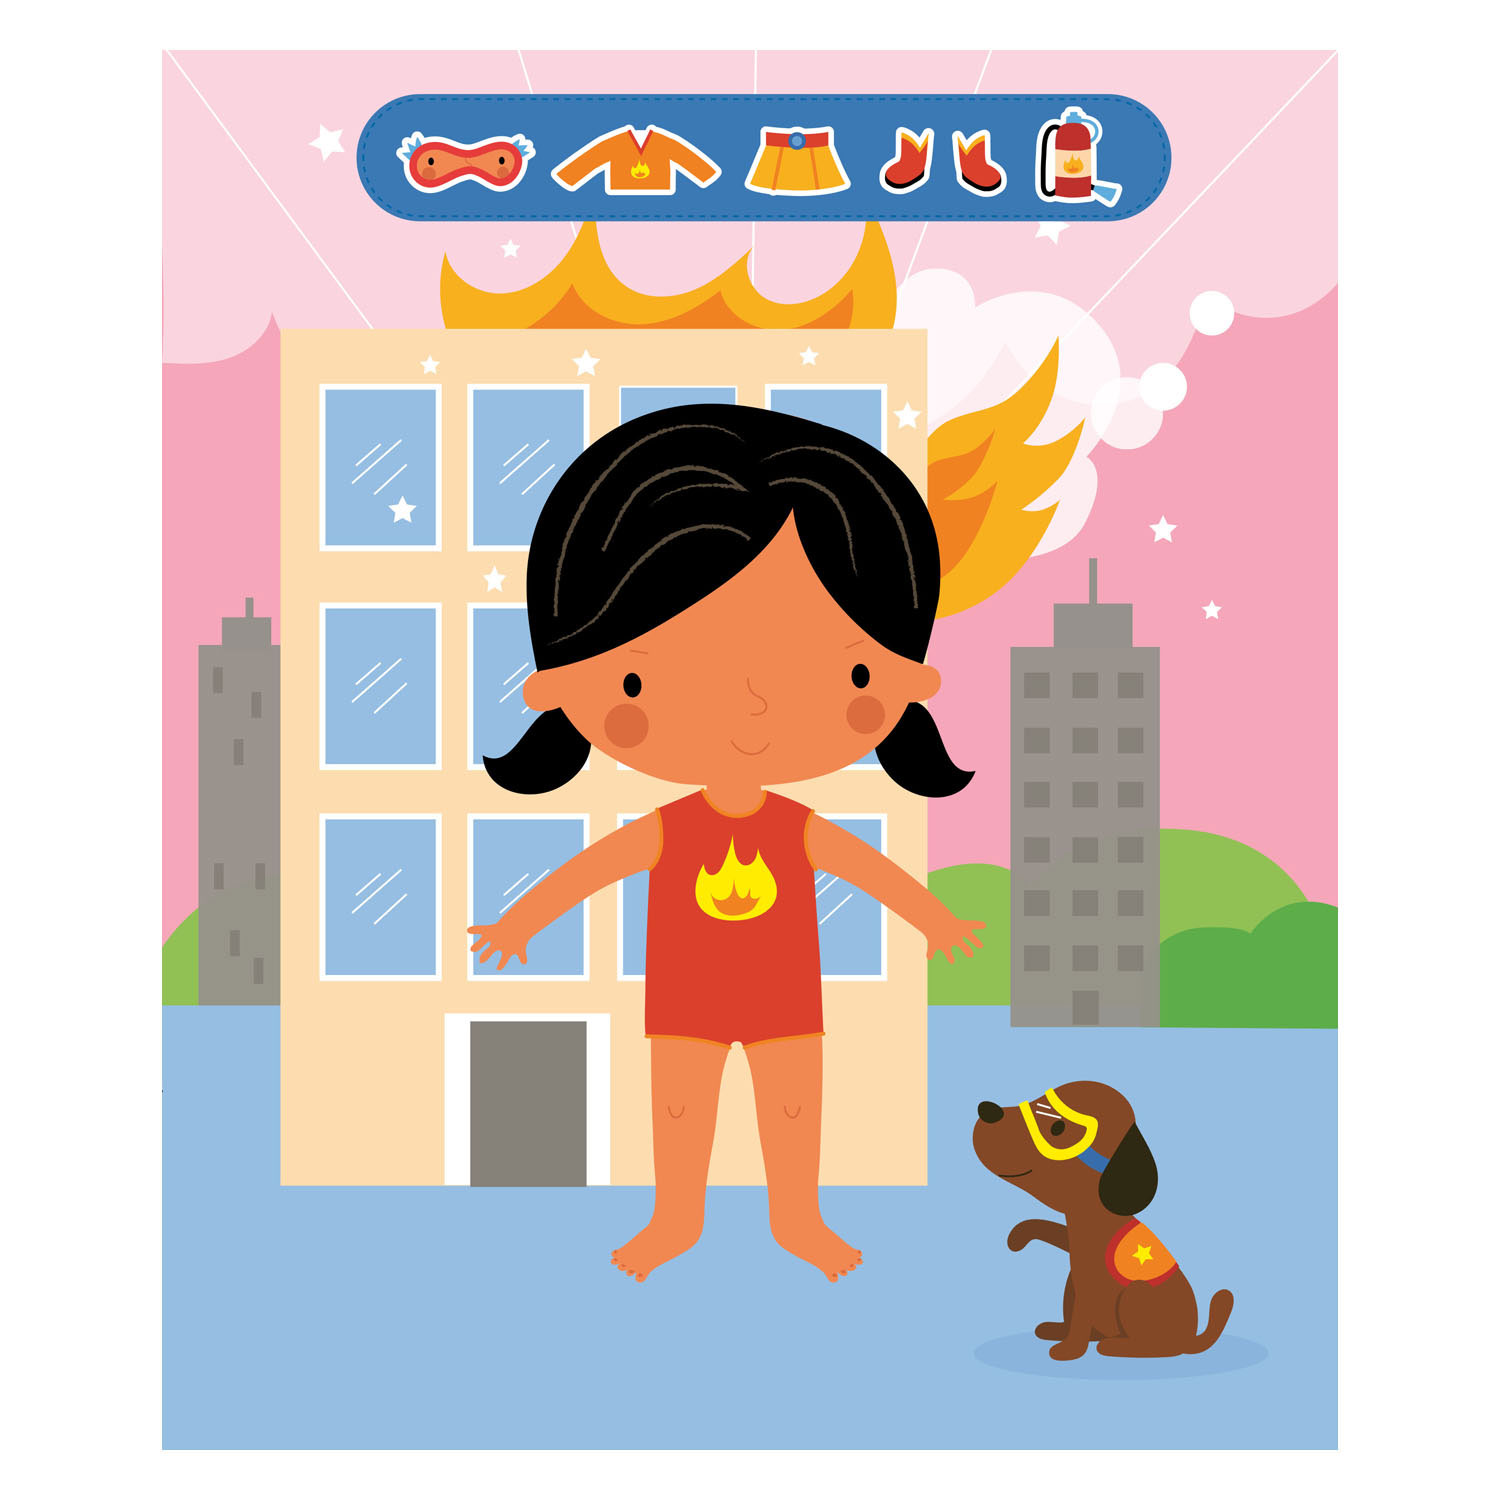 Super Girls Sticker Fun – Anziehpuppen-Stickerbuch